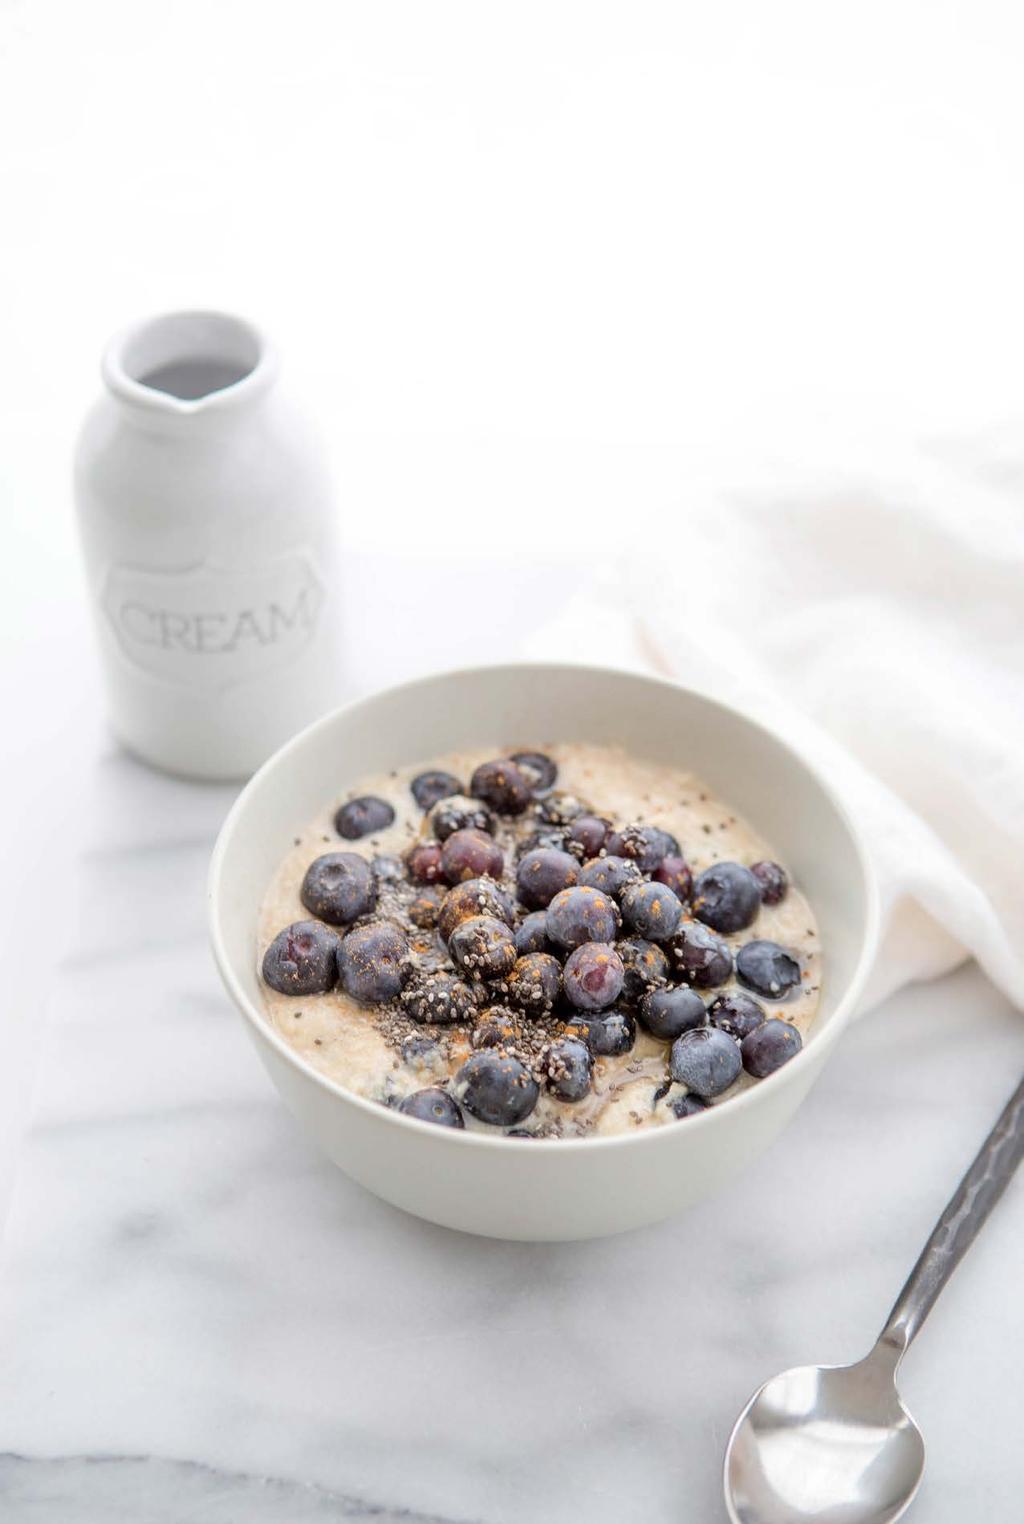 20. Blueberry Cream of Almond Breakfast Porridge Blueberries and cream stirred into almond-based porridge is beyond delicious!